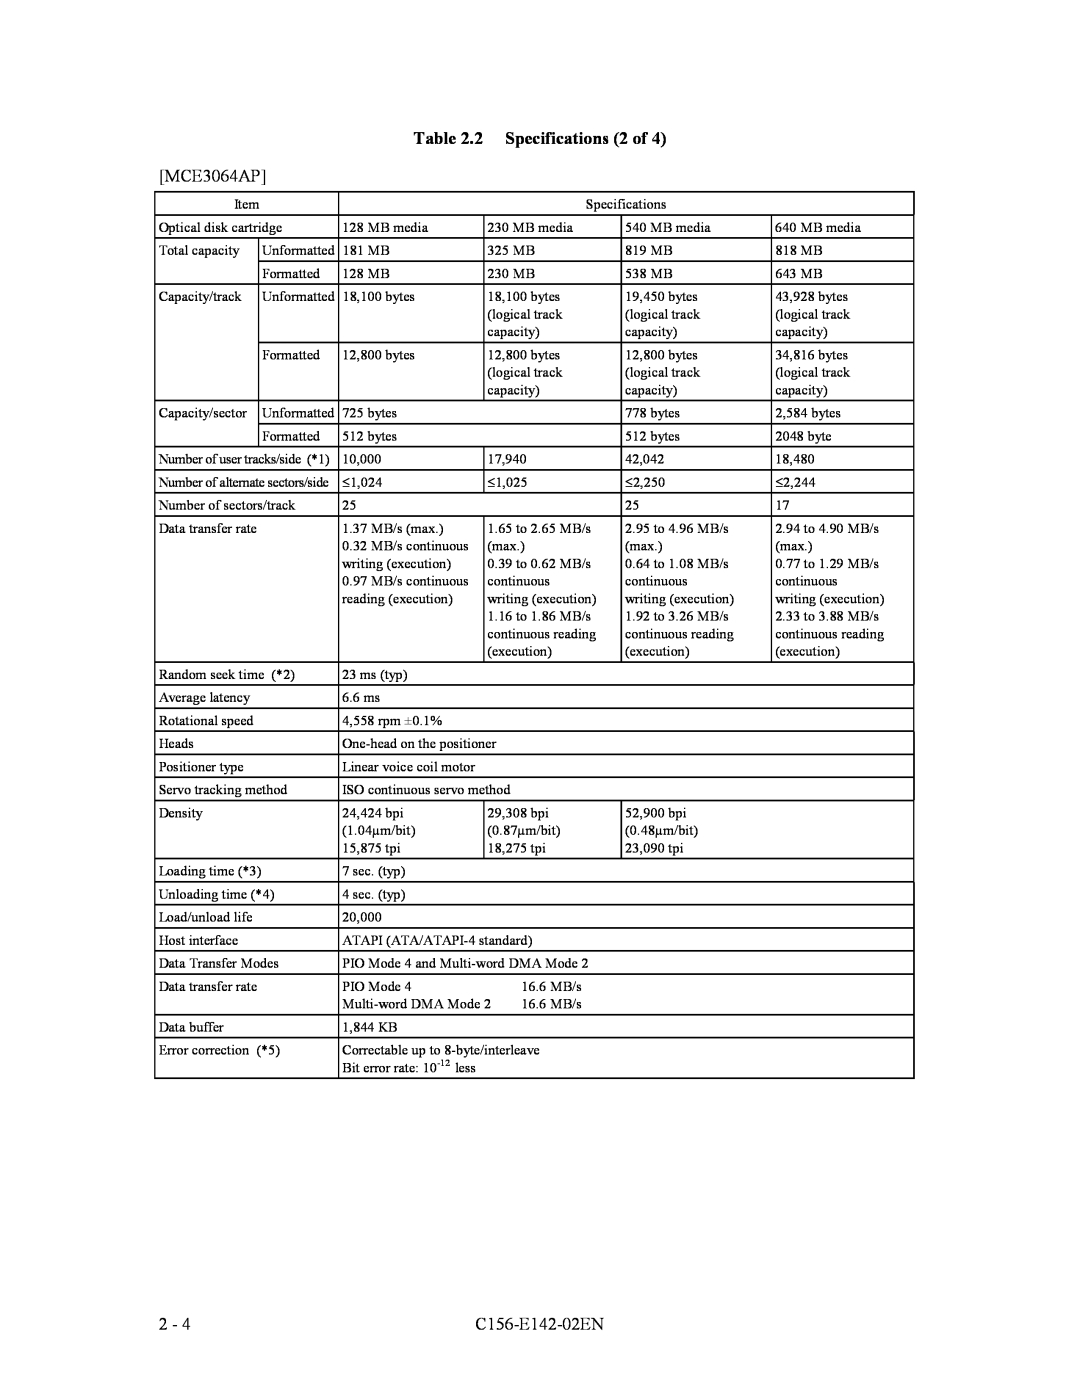 Fujitsu MCE3130AP, MCF3064AP manual 2 Specifications 2 of, MCE3064AP, C156-E142-02EN 